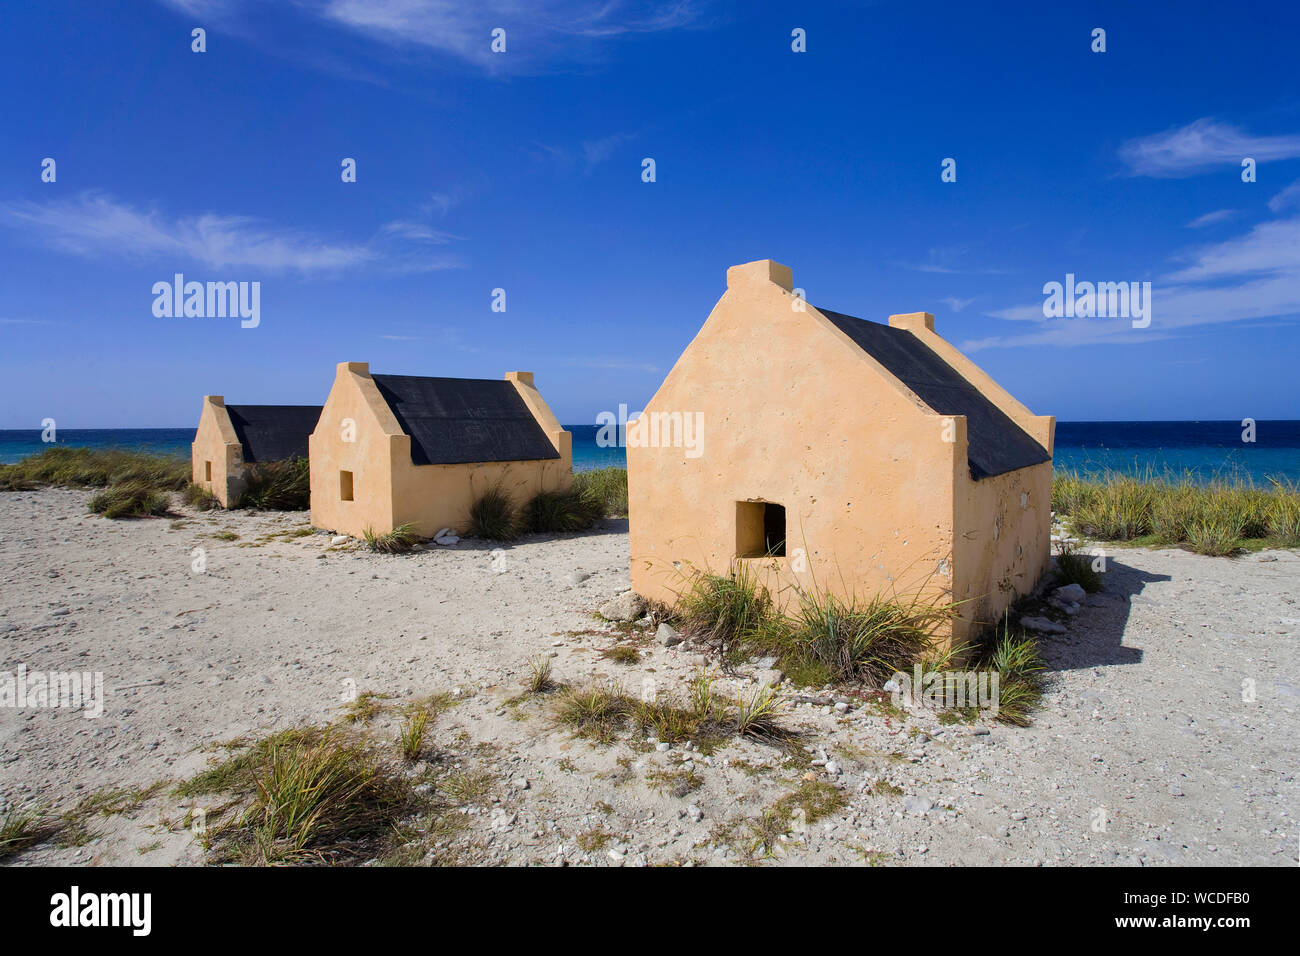 Rosso, Slave slave capanne in spiaggia, lavoro forzato, Bonaire, Antille olandesi Foto Stock